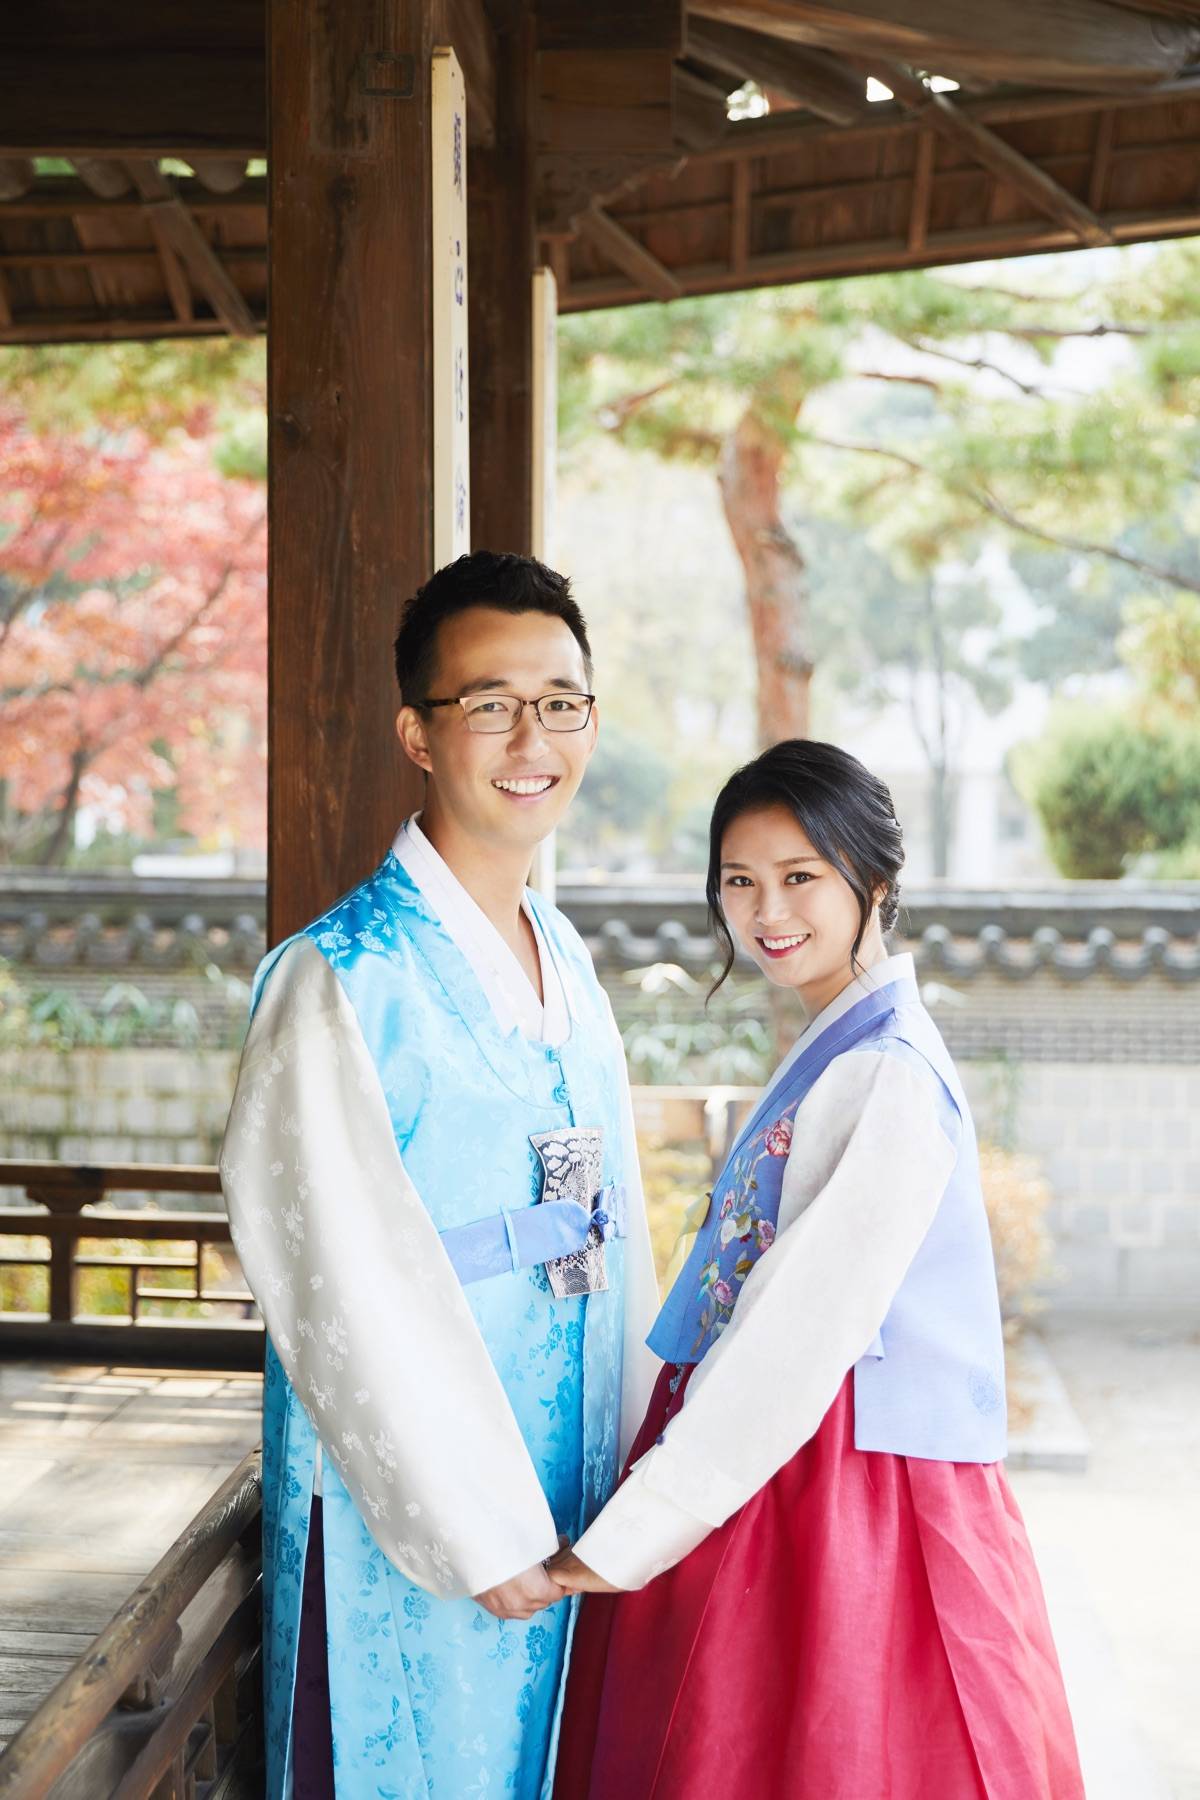 Silk hand painted flowers on hanbok skirt